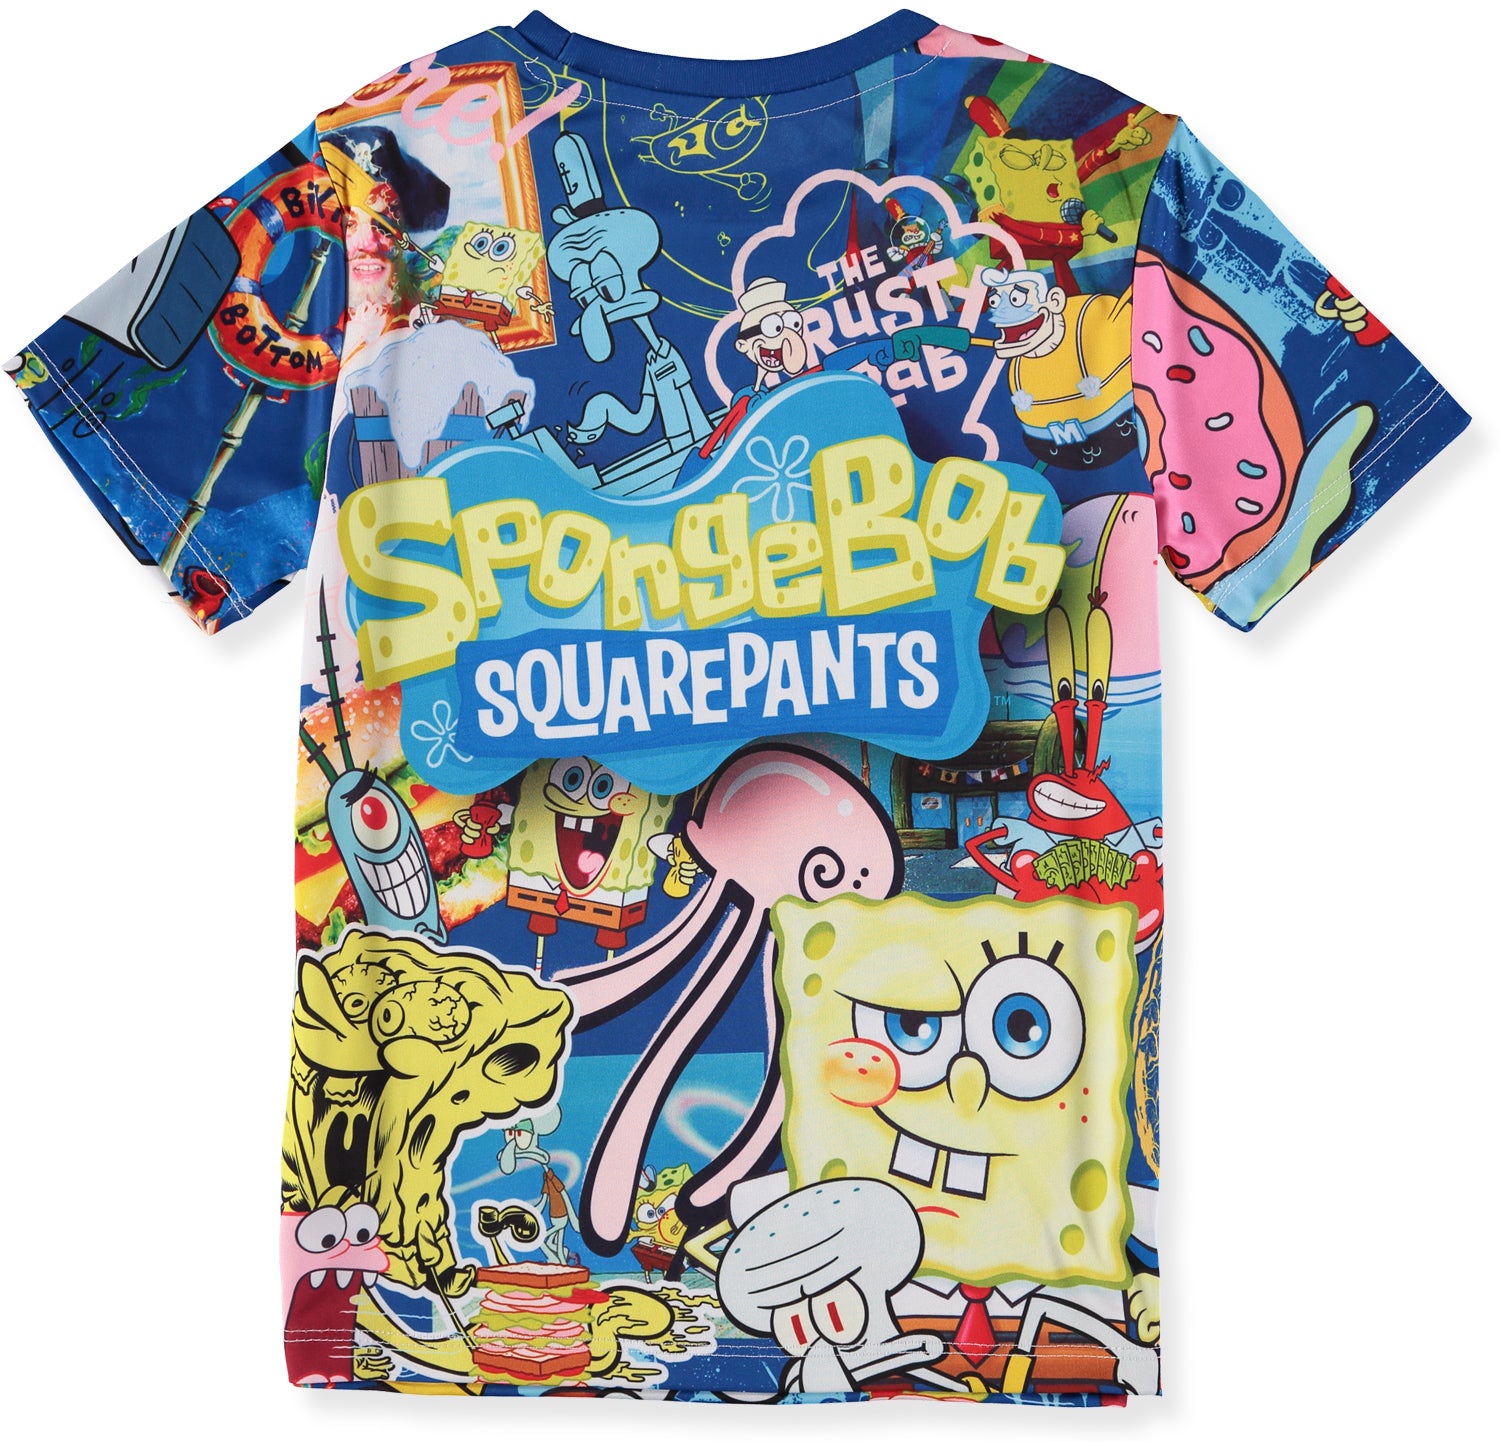  Nickelodeon Unisex Spongebob Squarepants Baseball Jersey -  Novelty Fashion Uniform Shirt – Jersey Top for Men and Women, S-XL :  Clothing